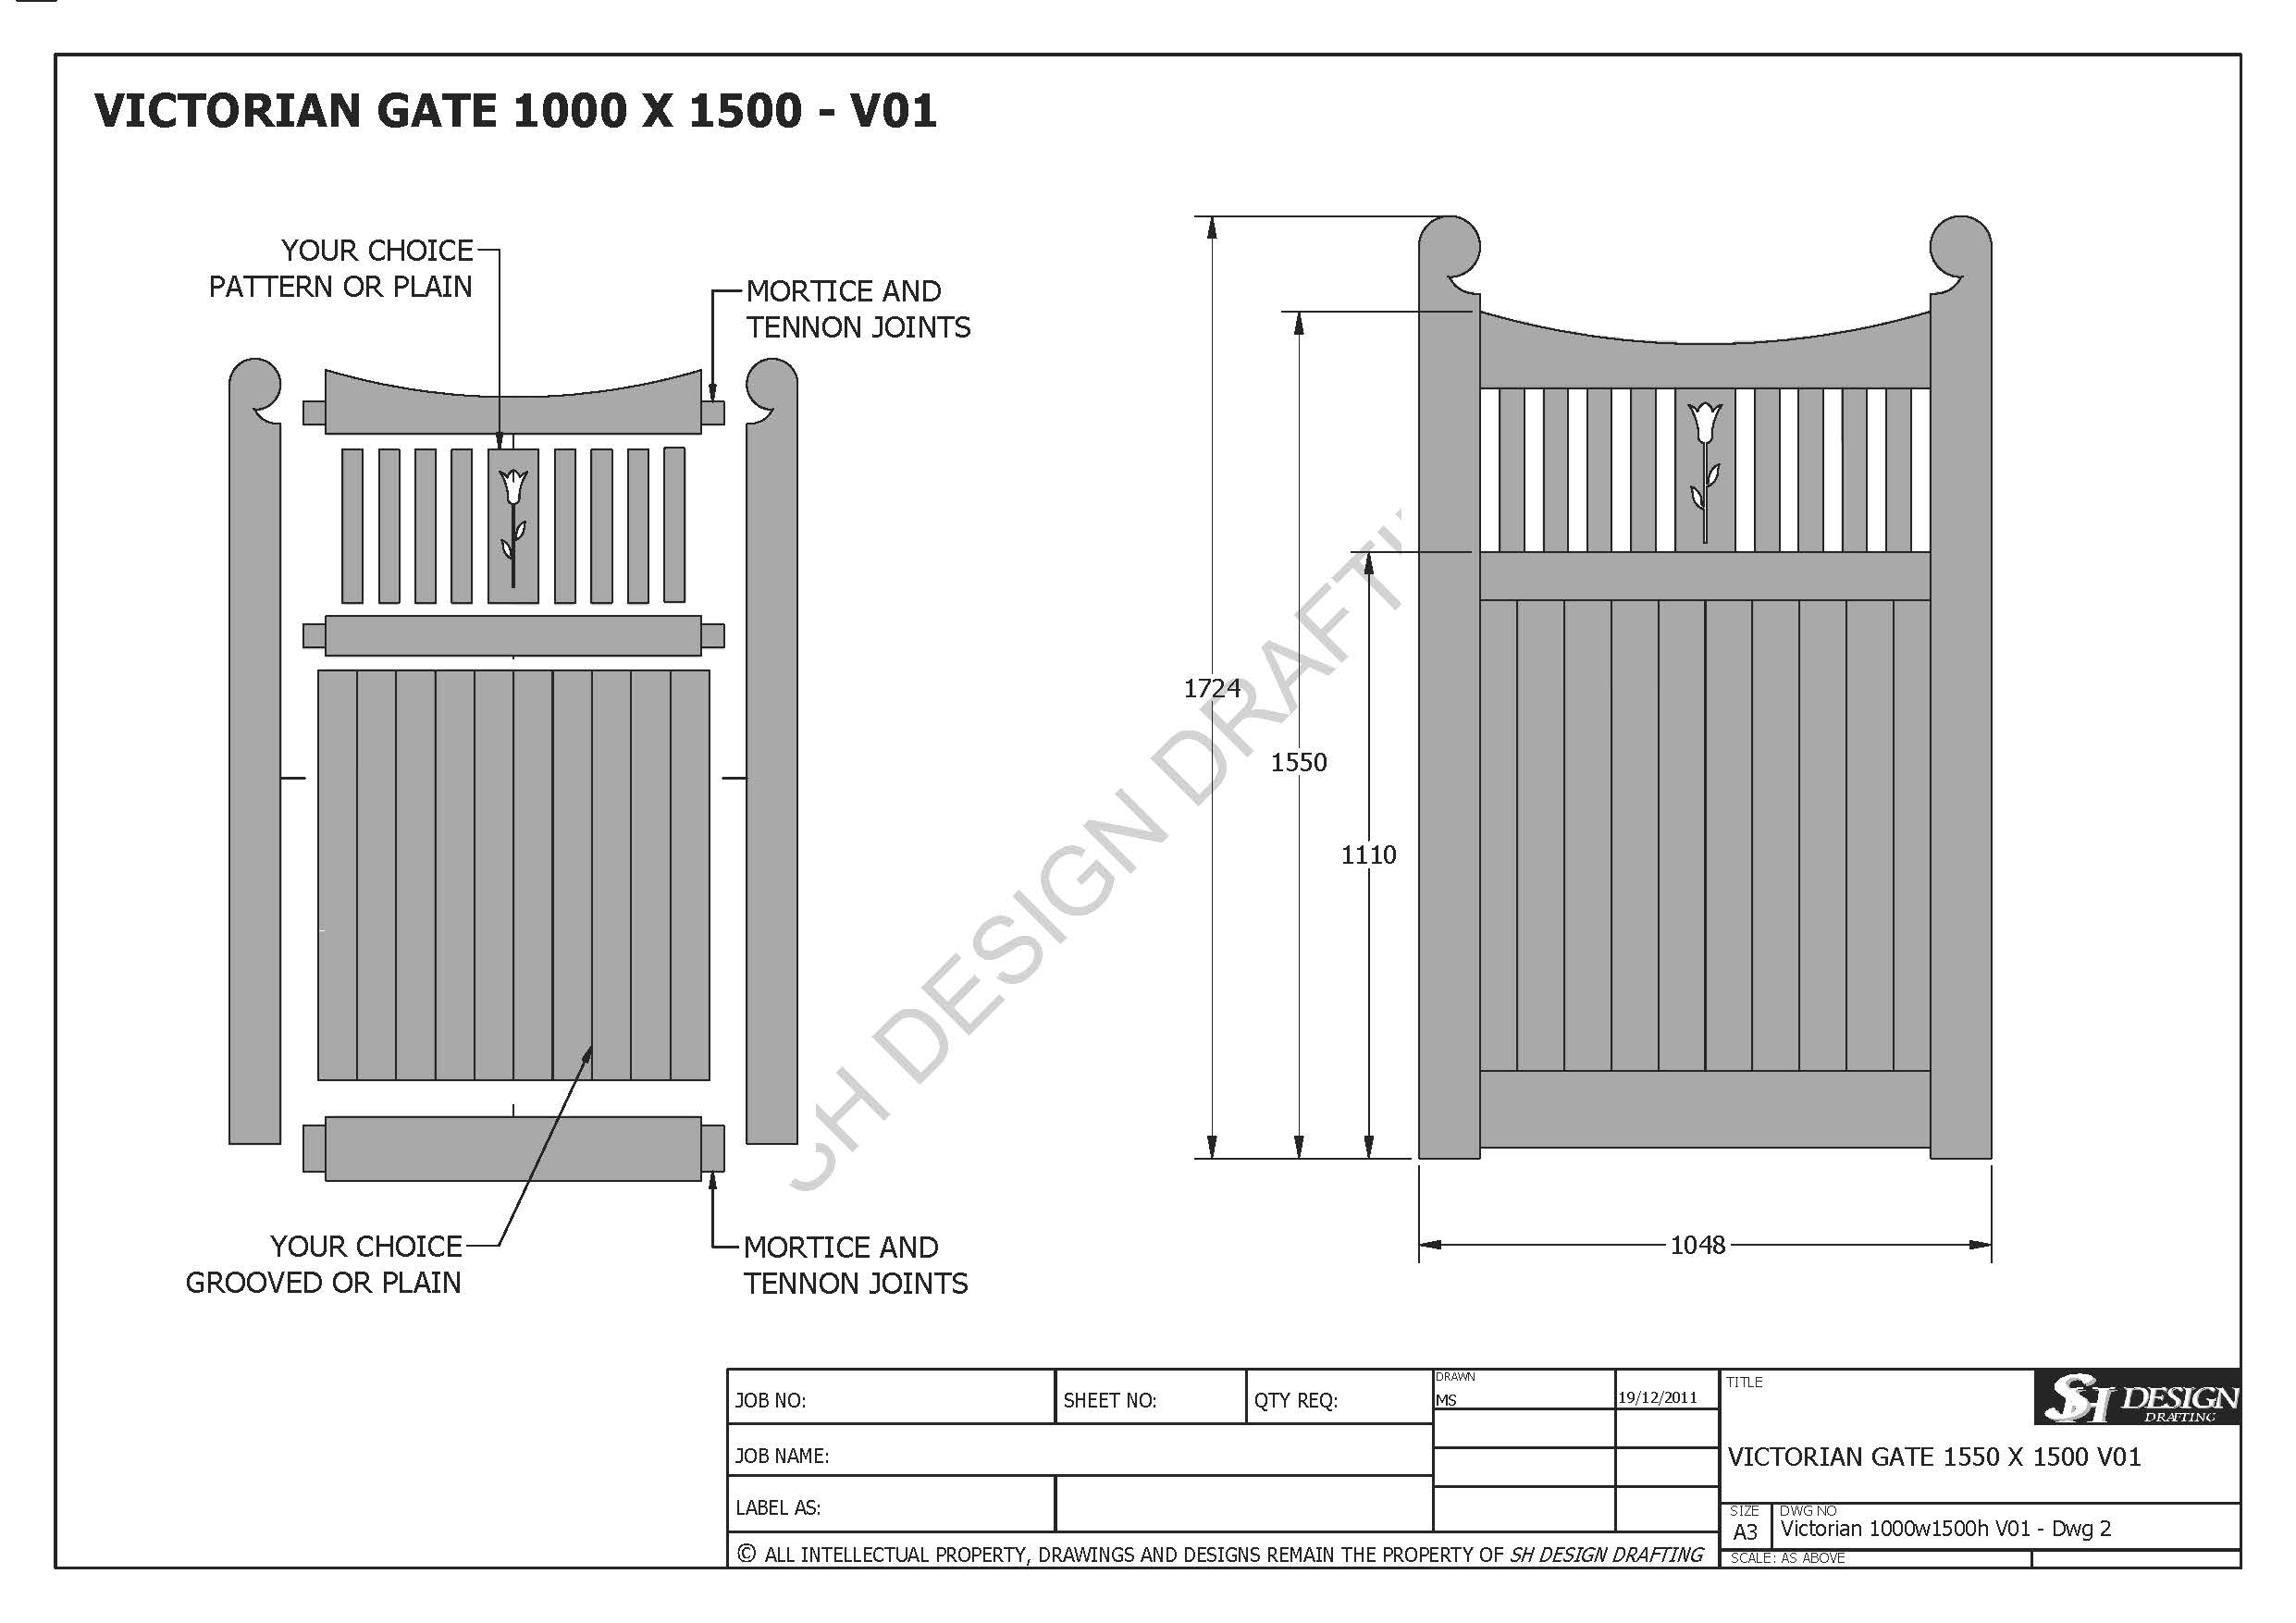 Victorian Gate 1000 x 1500 - V01